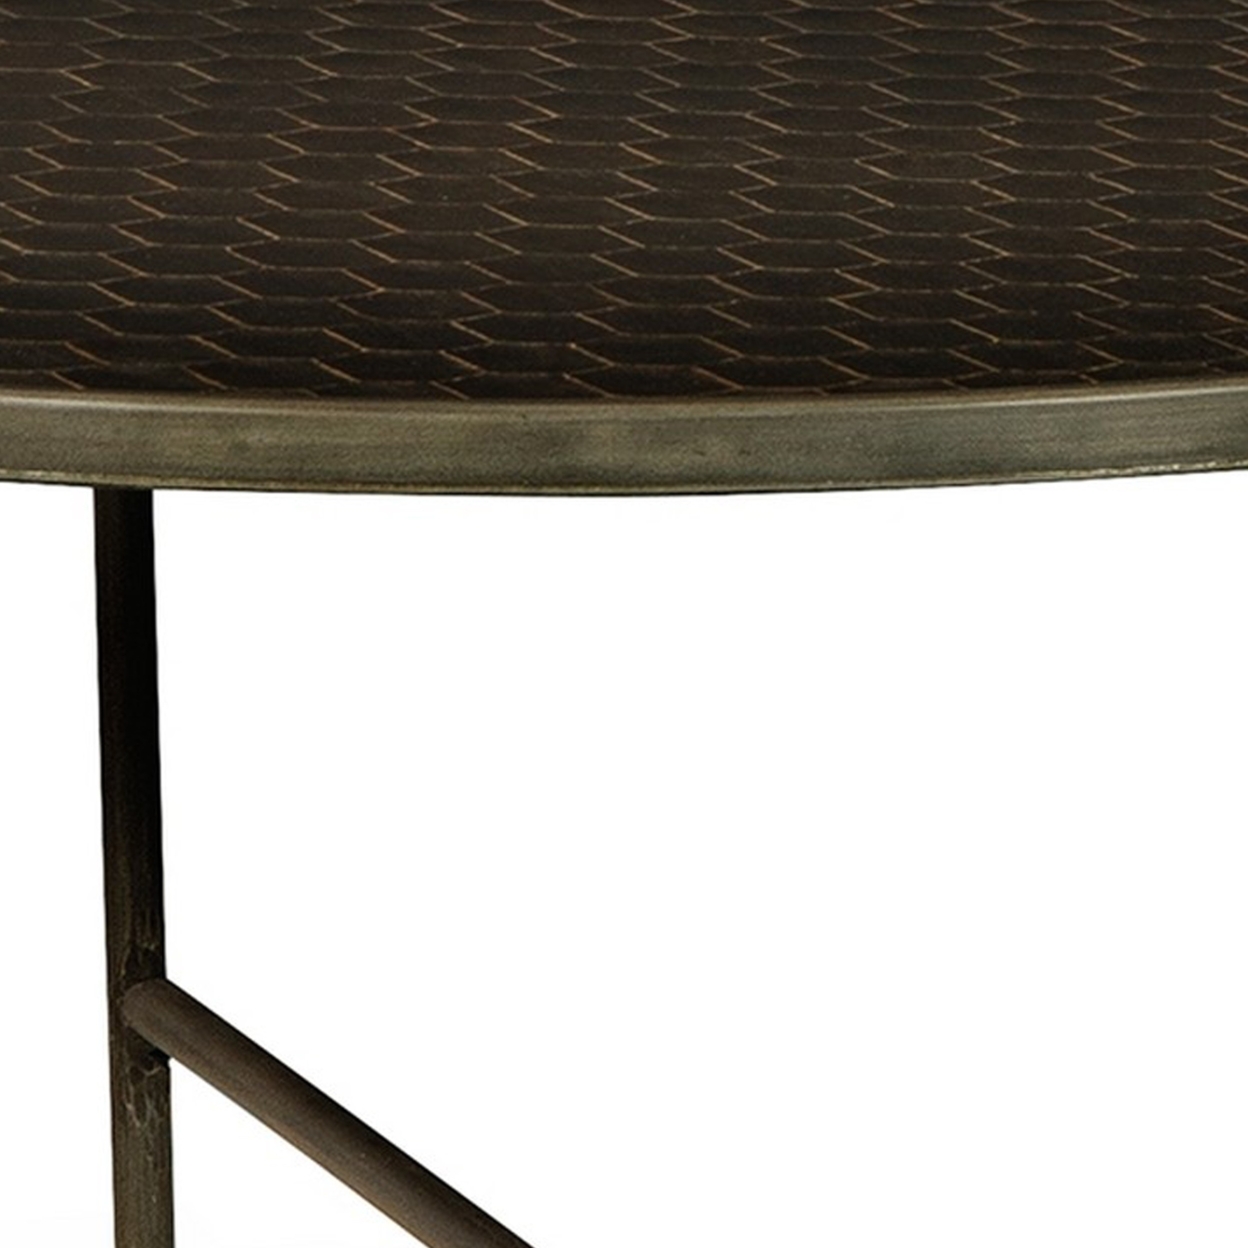 Modern 35 Inch Table, Crossed Metal Legs, Mango Wood Surface, Gray Brown- Saltoro Sherpi